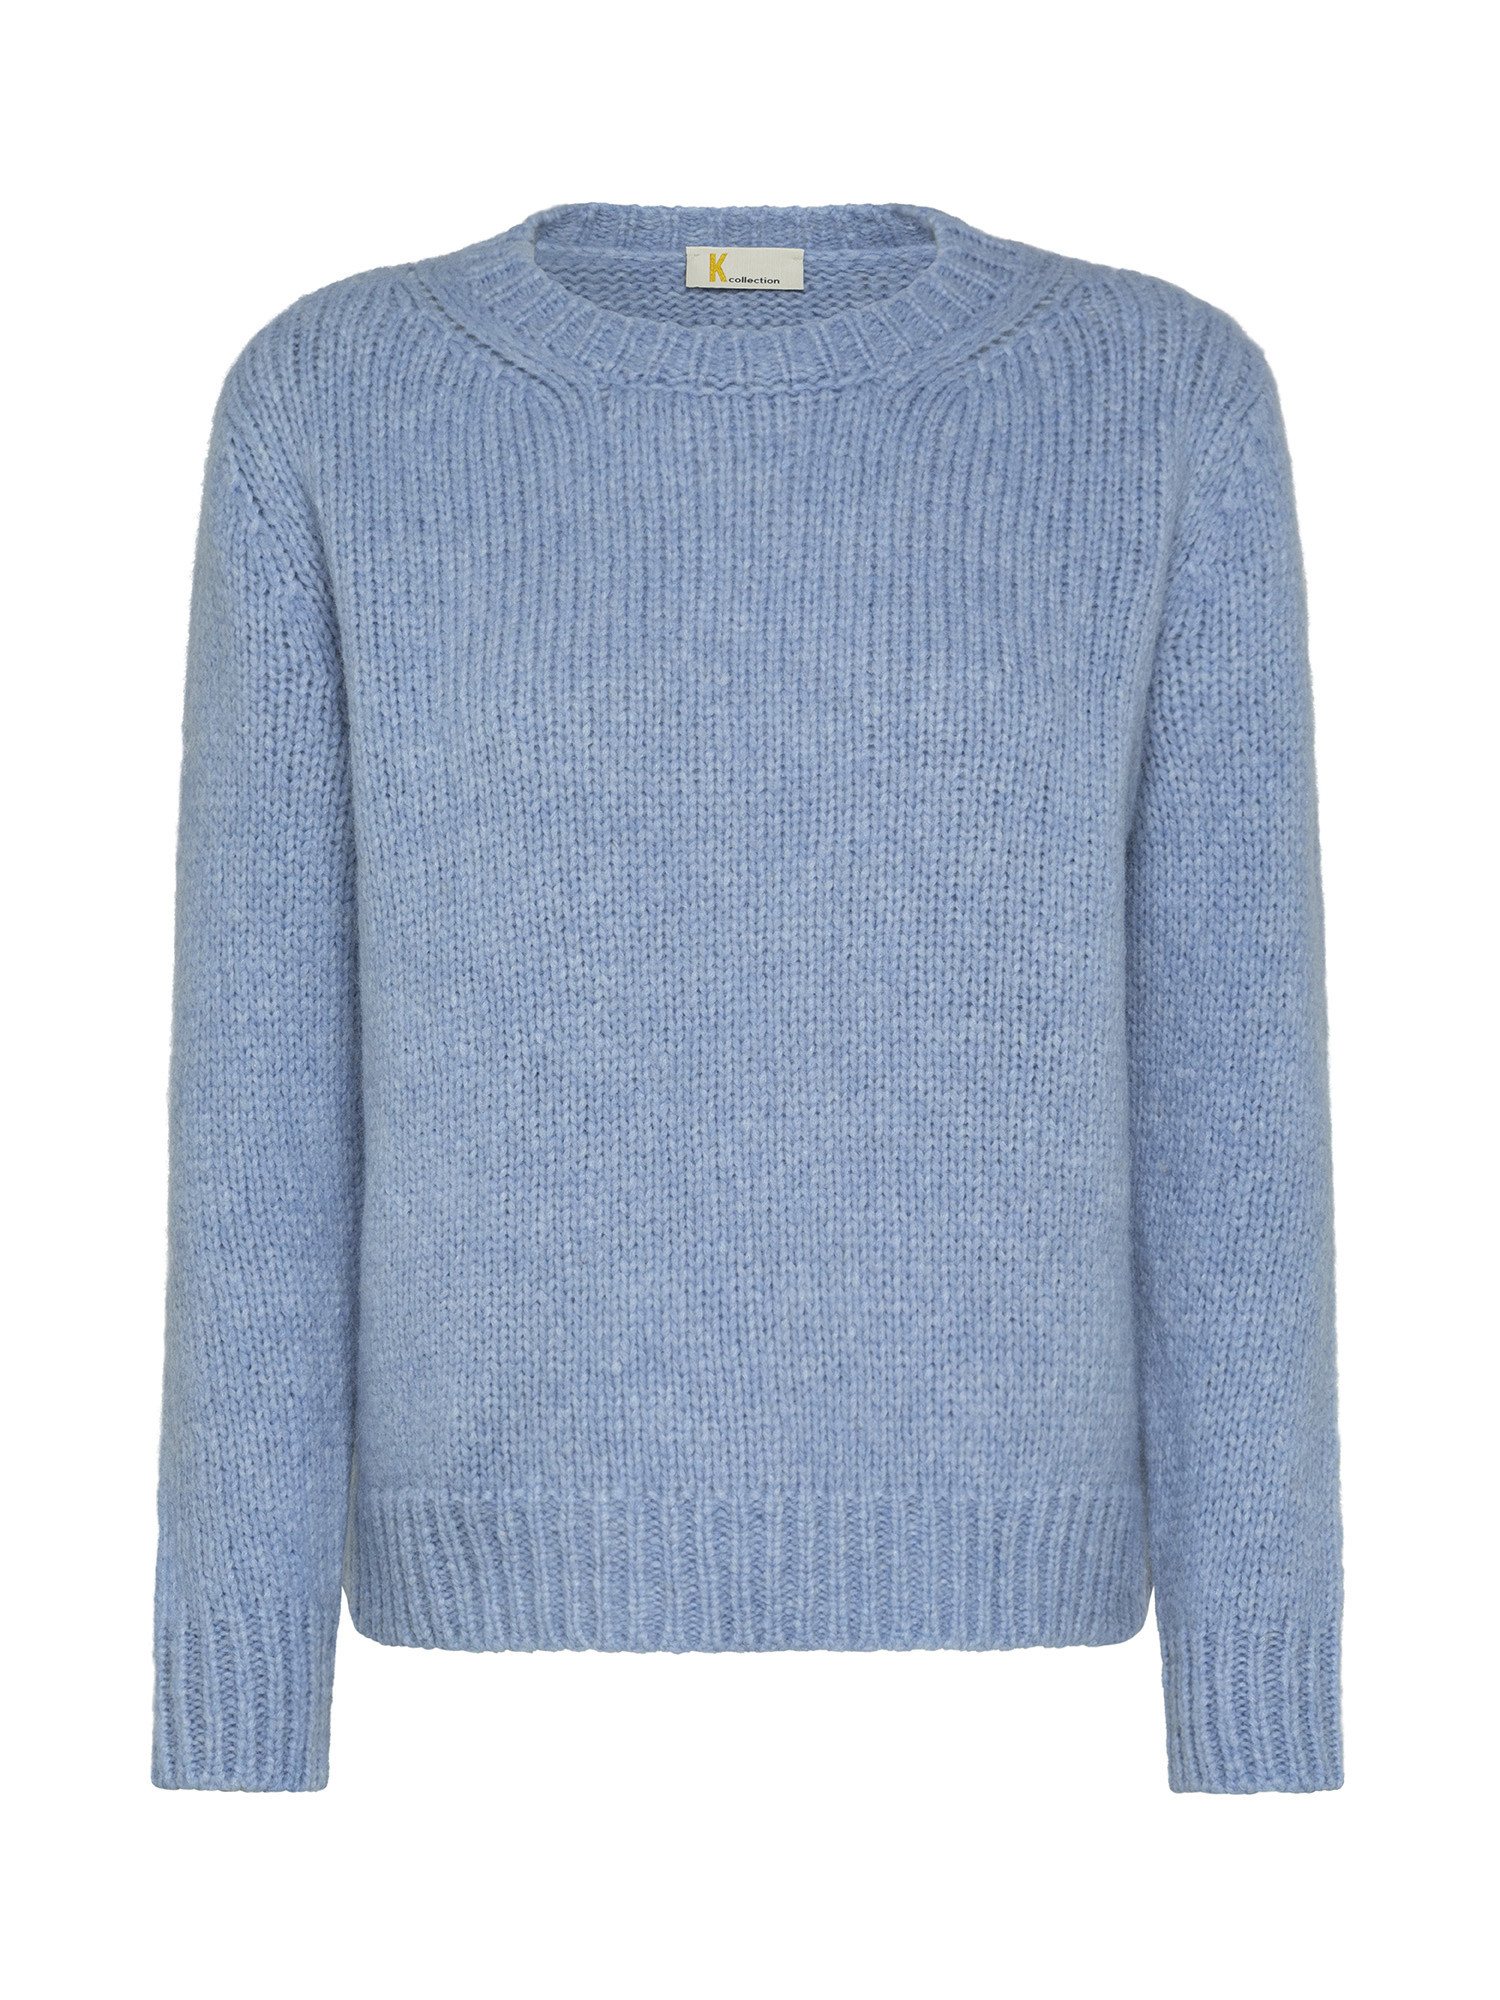 K Collection - Crewneck sweater, Light Blue, large image number 0